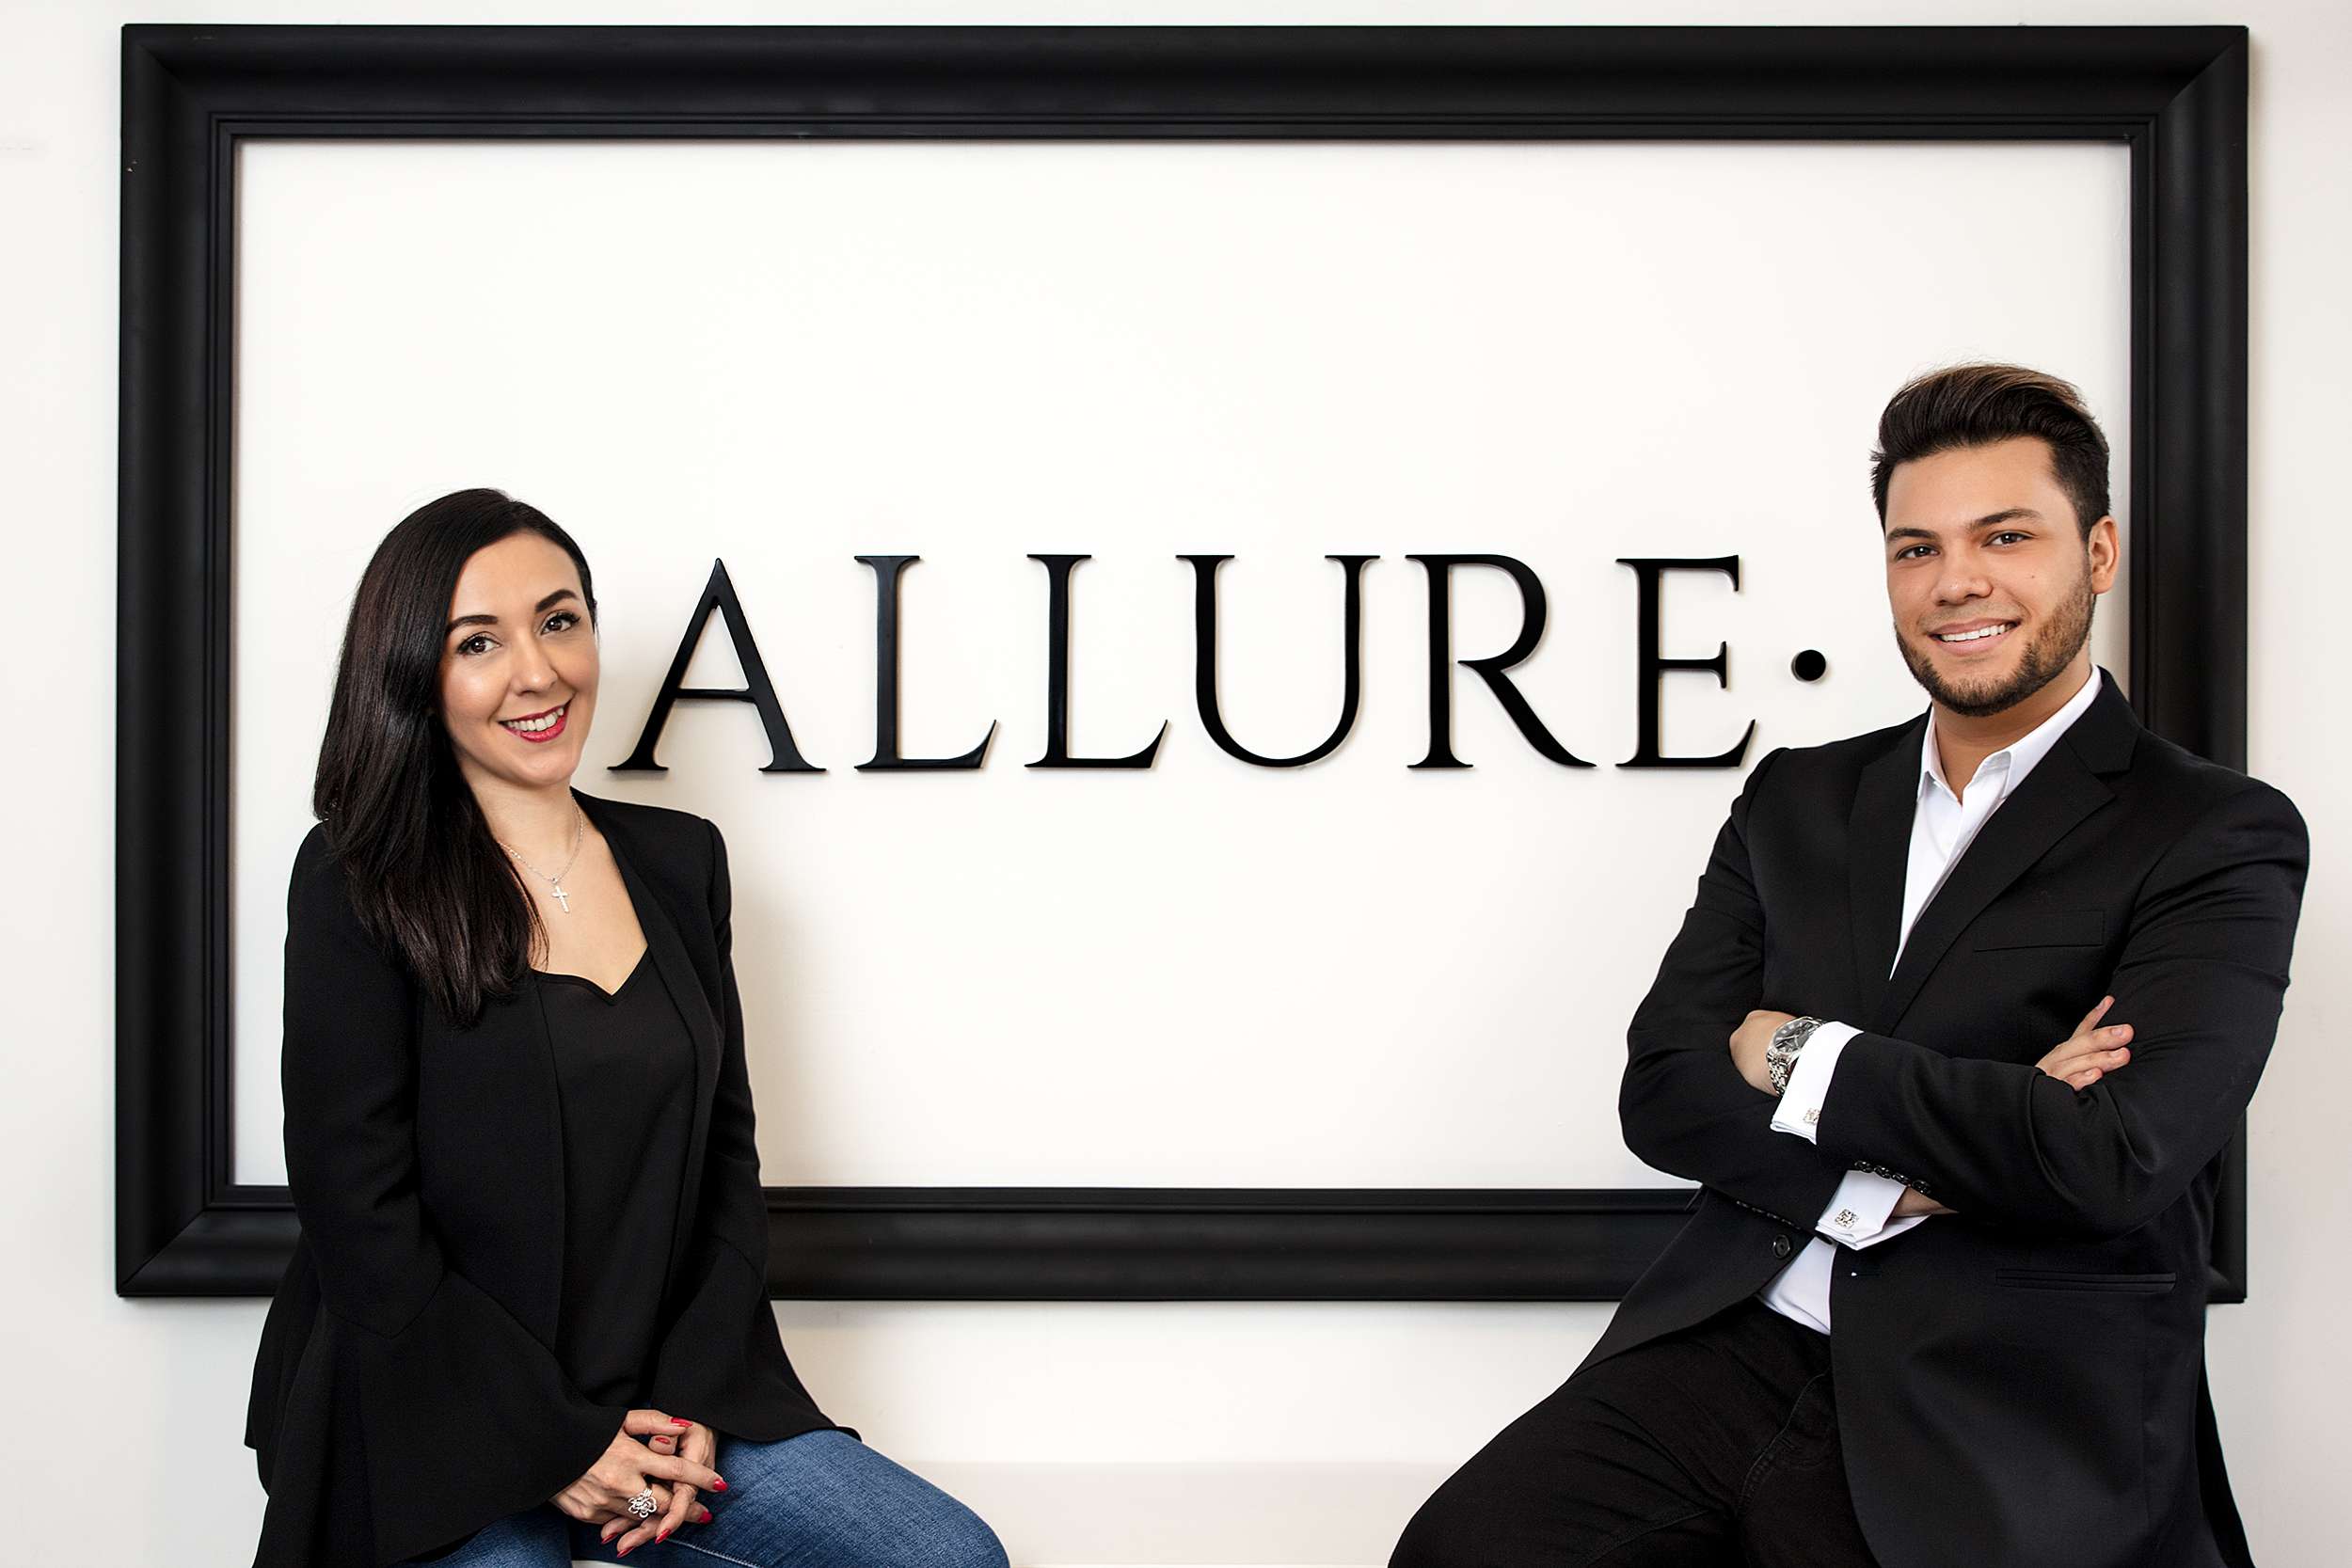 Maria Garcia and Miguel Costa posing at Allure's signage